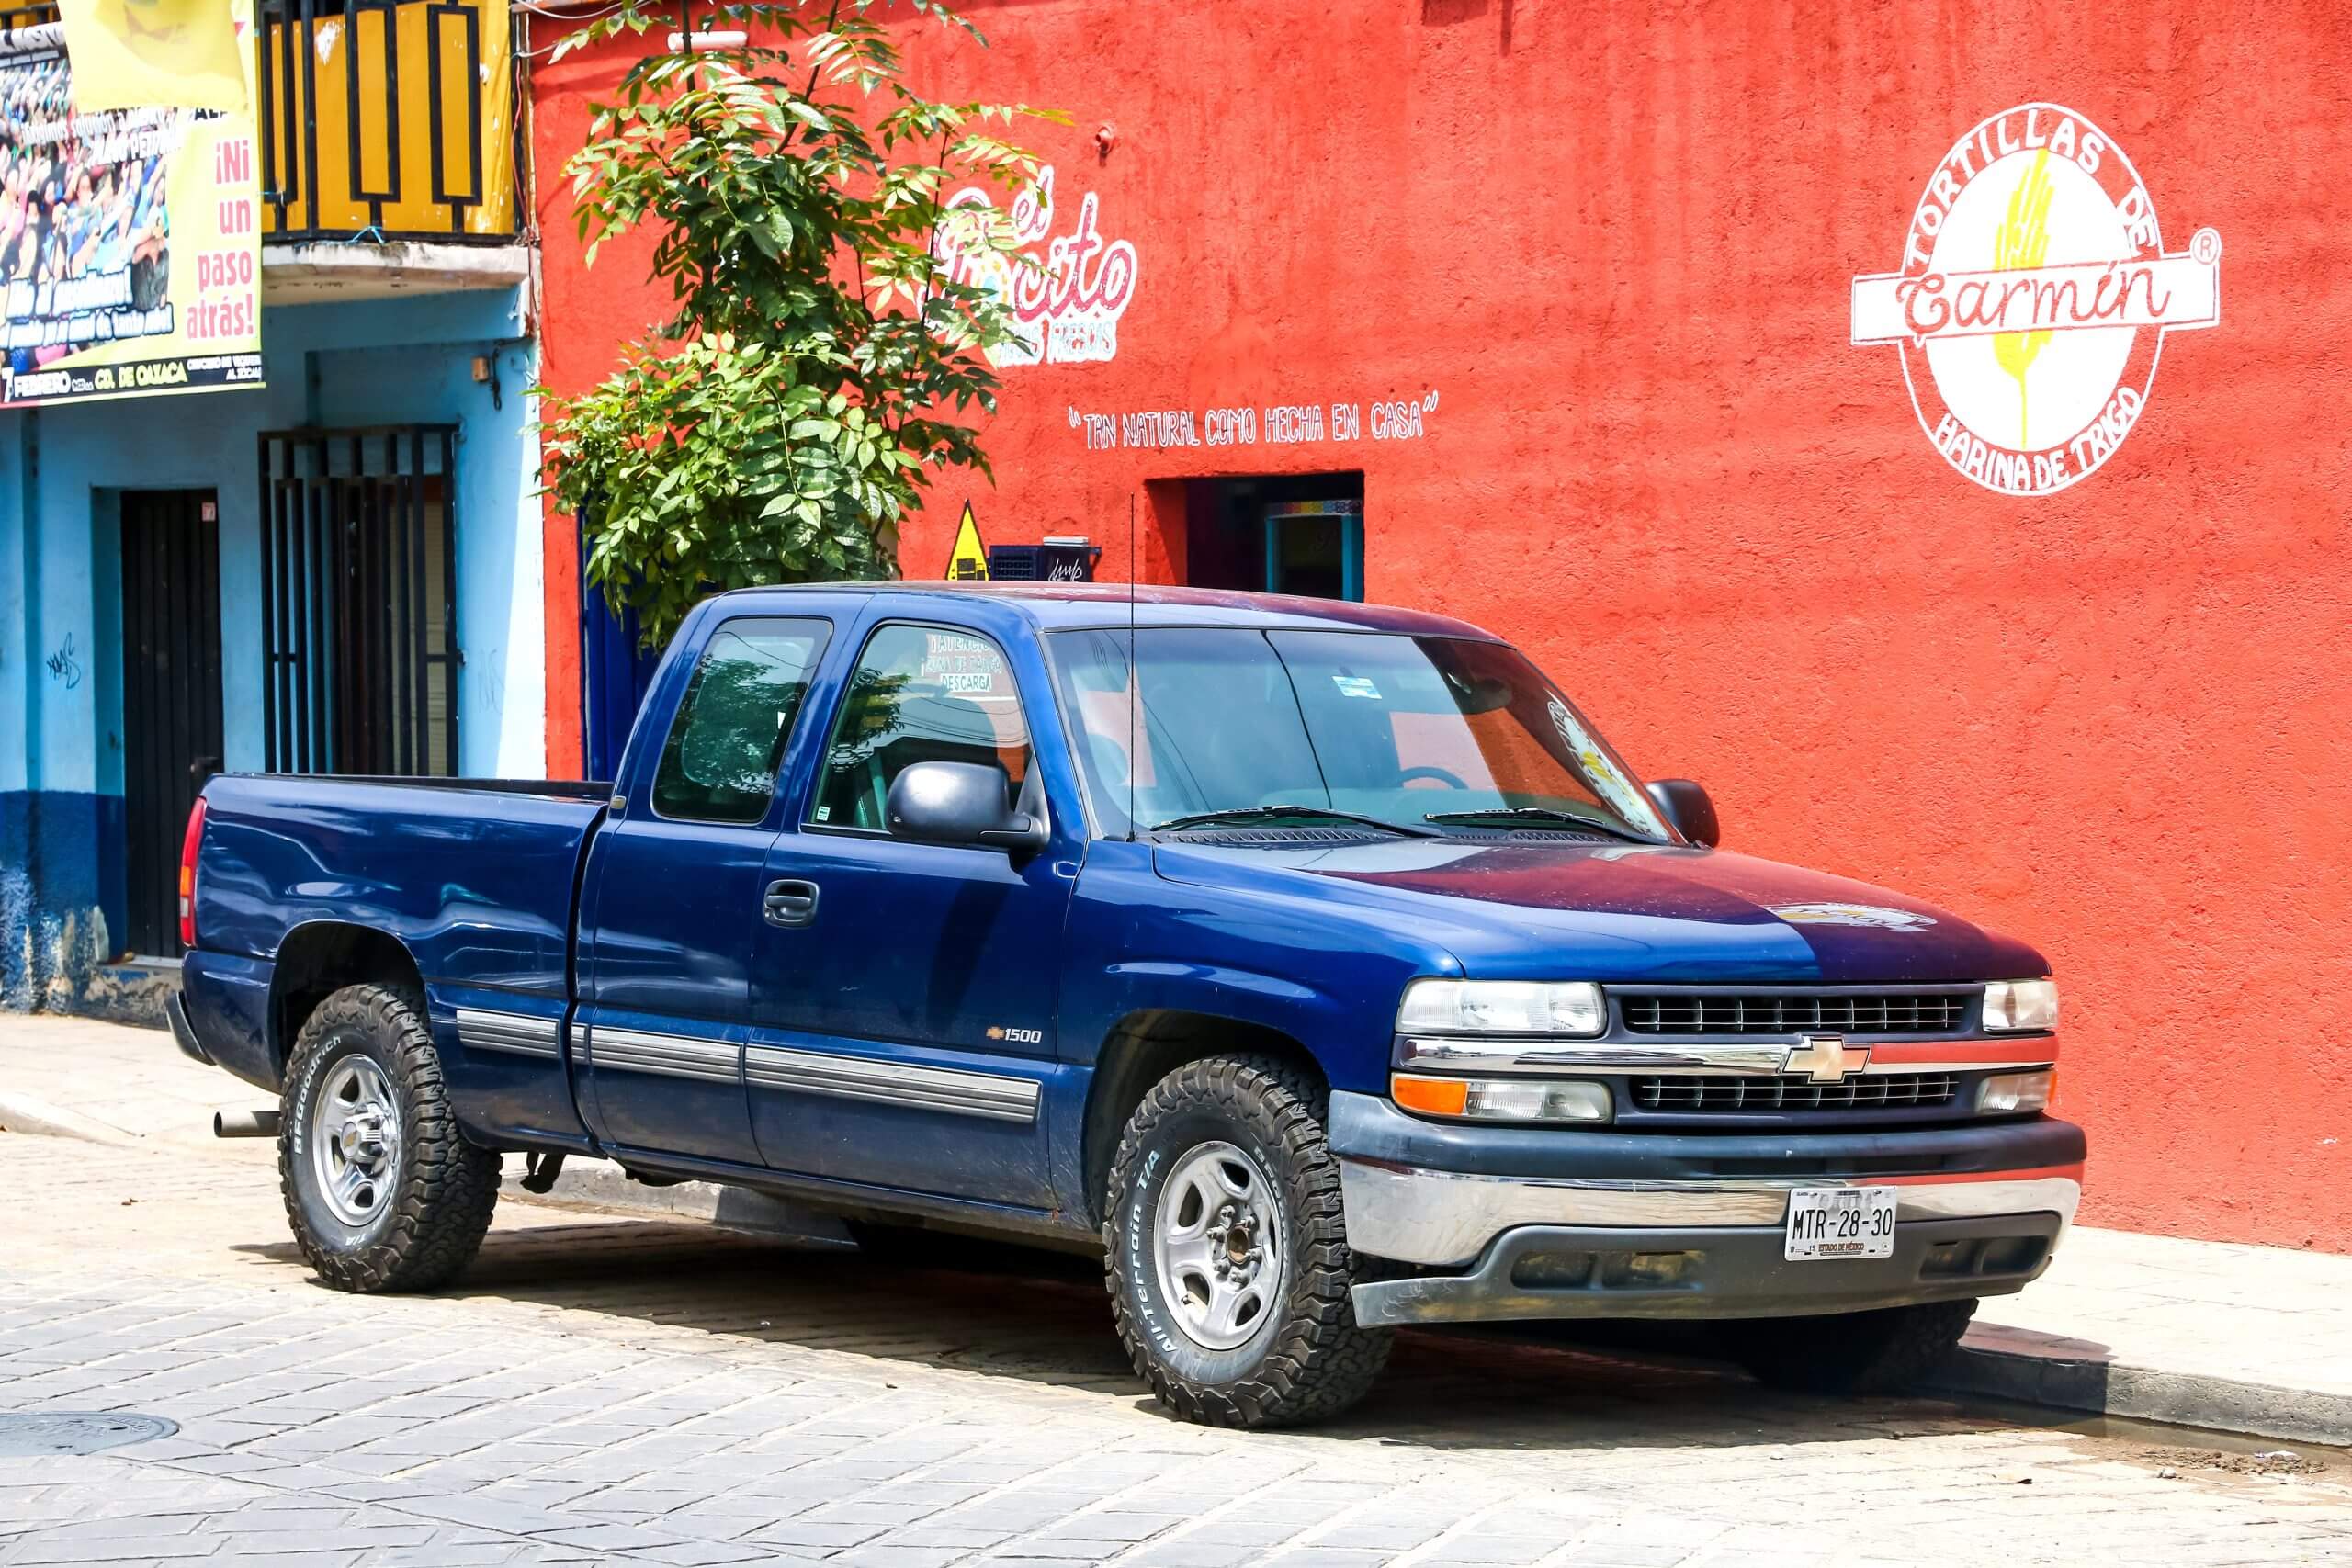 Blue Chevrolet Silverado Pickup truck  in the city street.